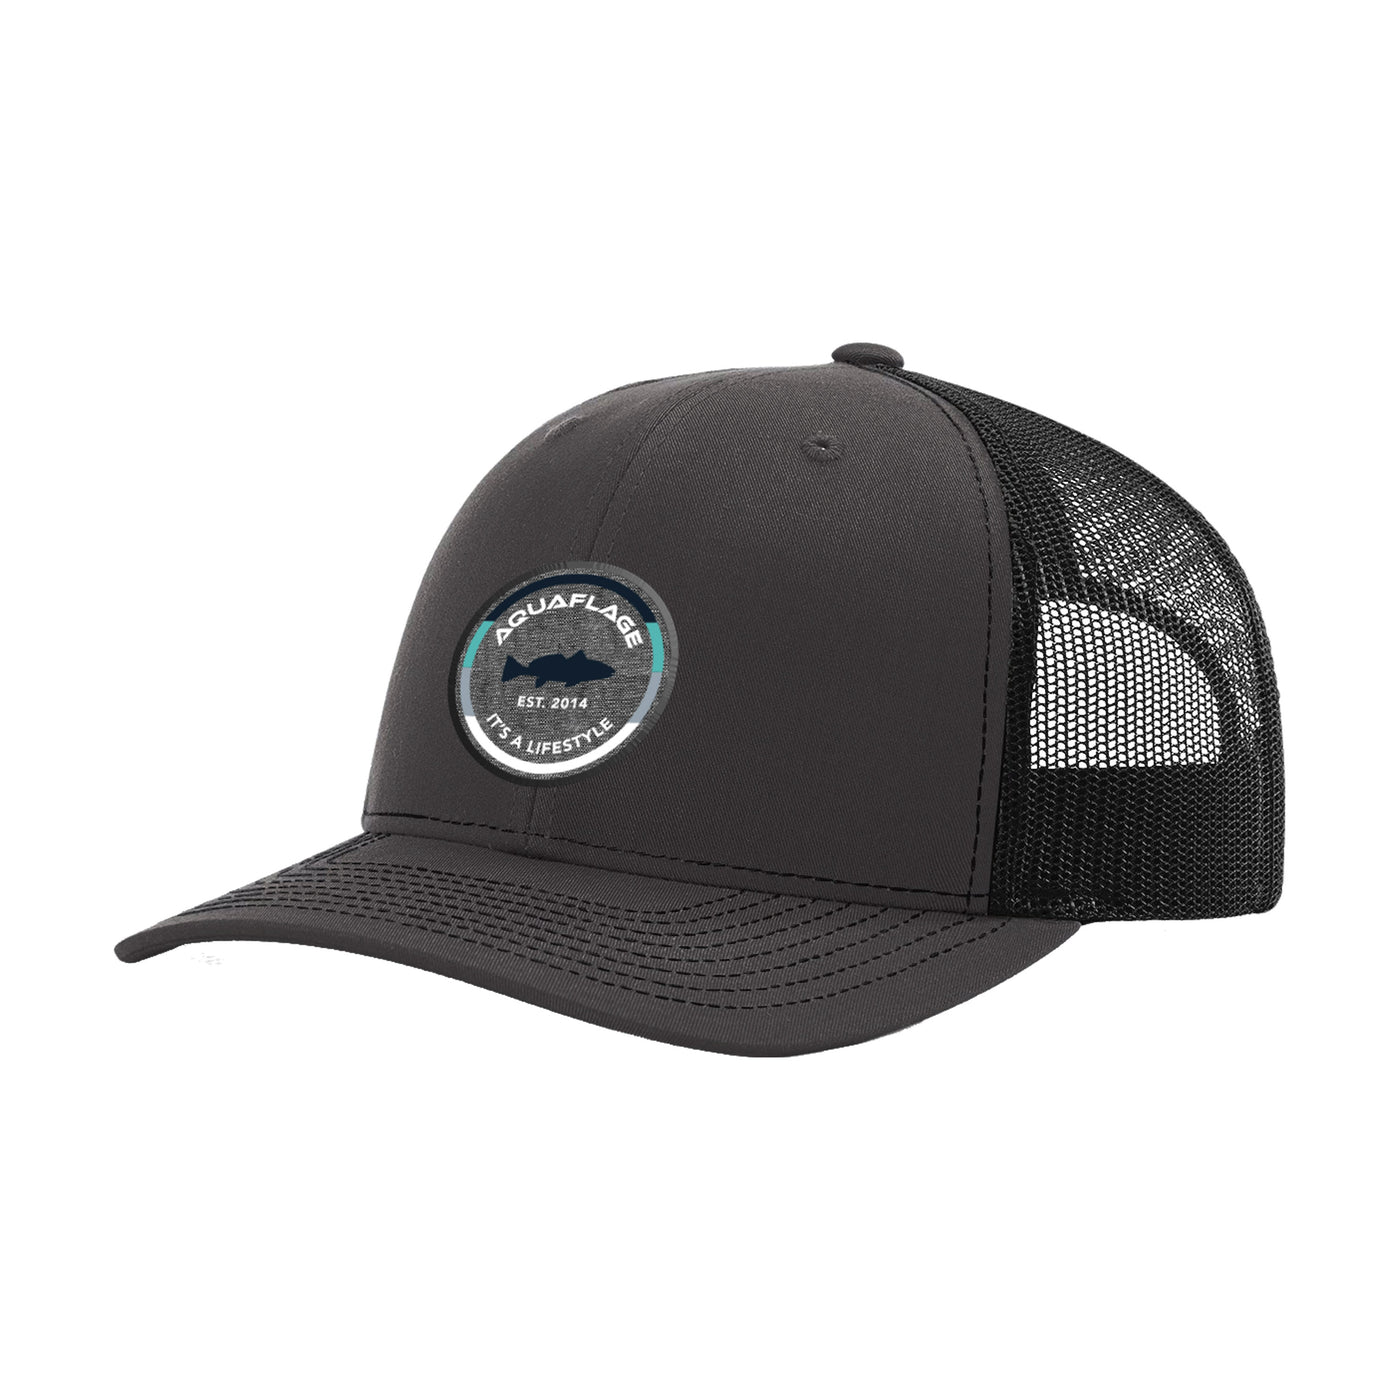 It's a Lifestyle Grey/Black Trucker Hat